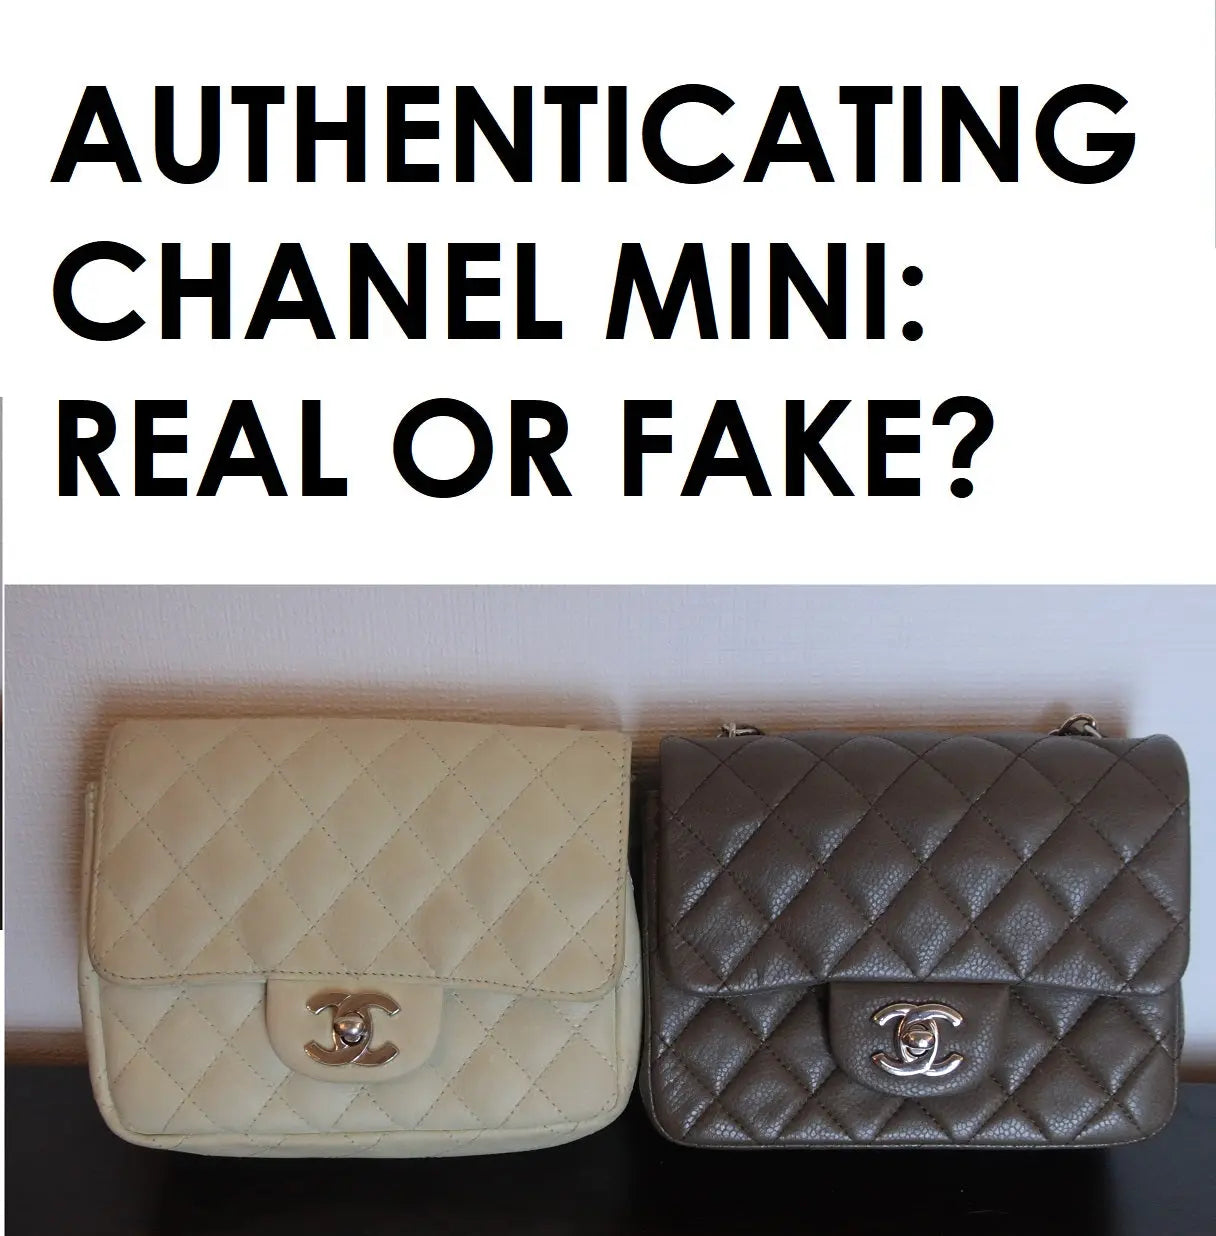 chanel check authenticity